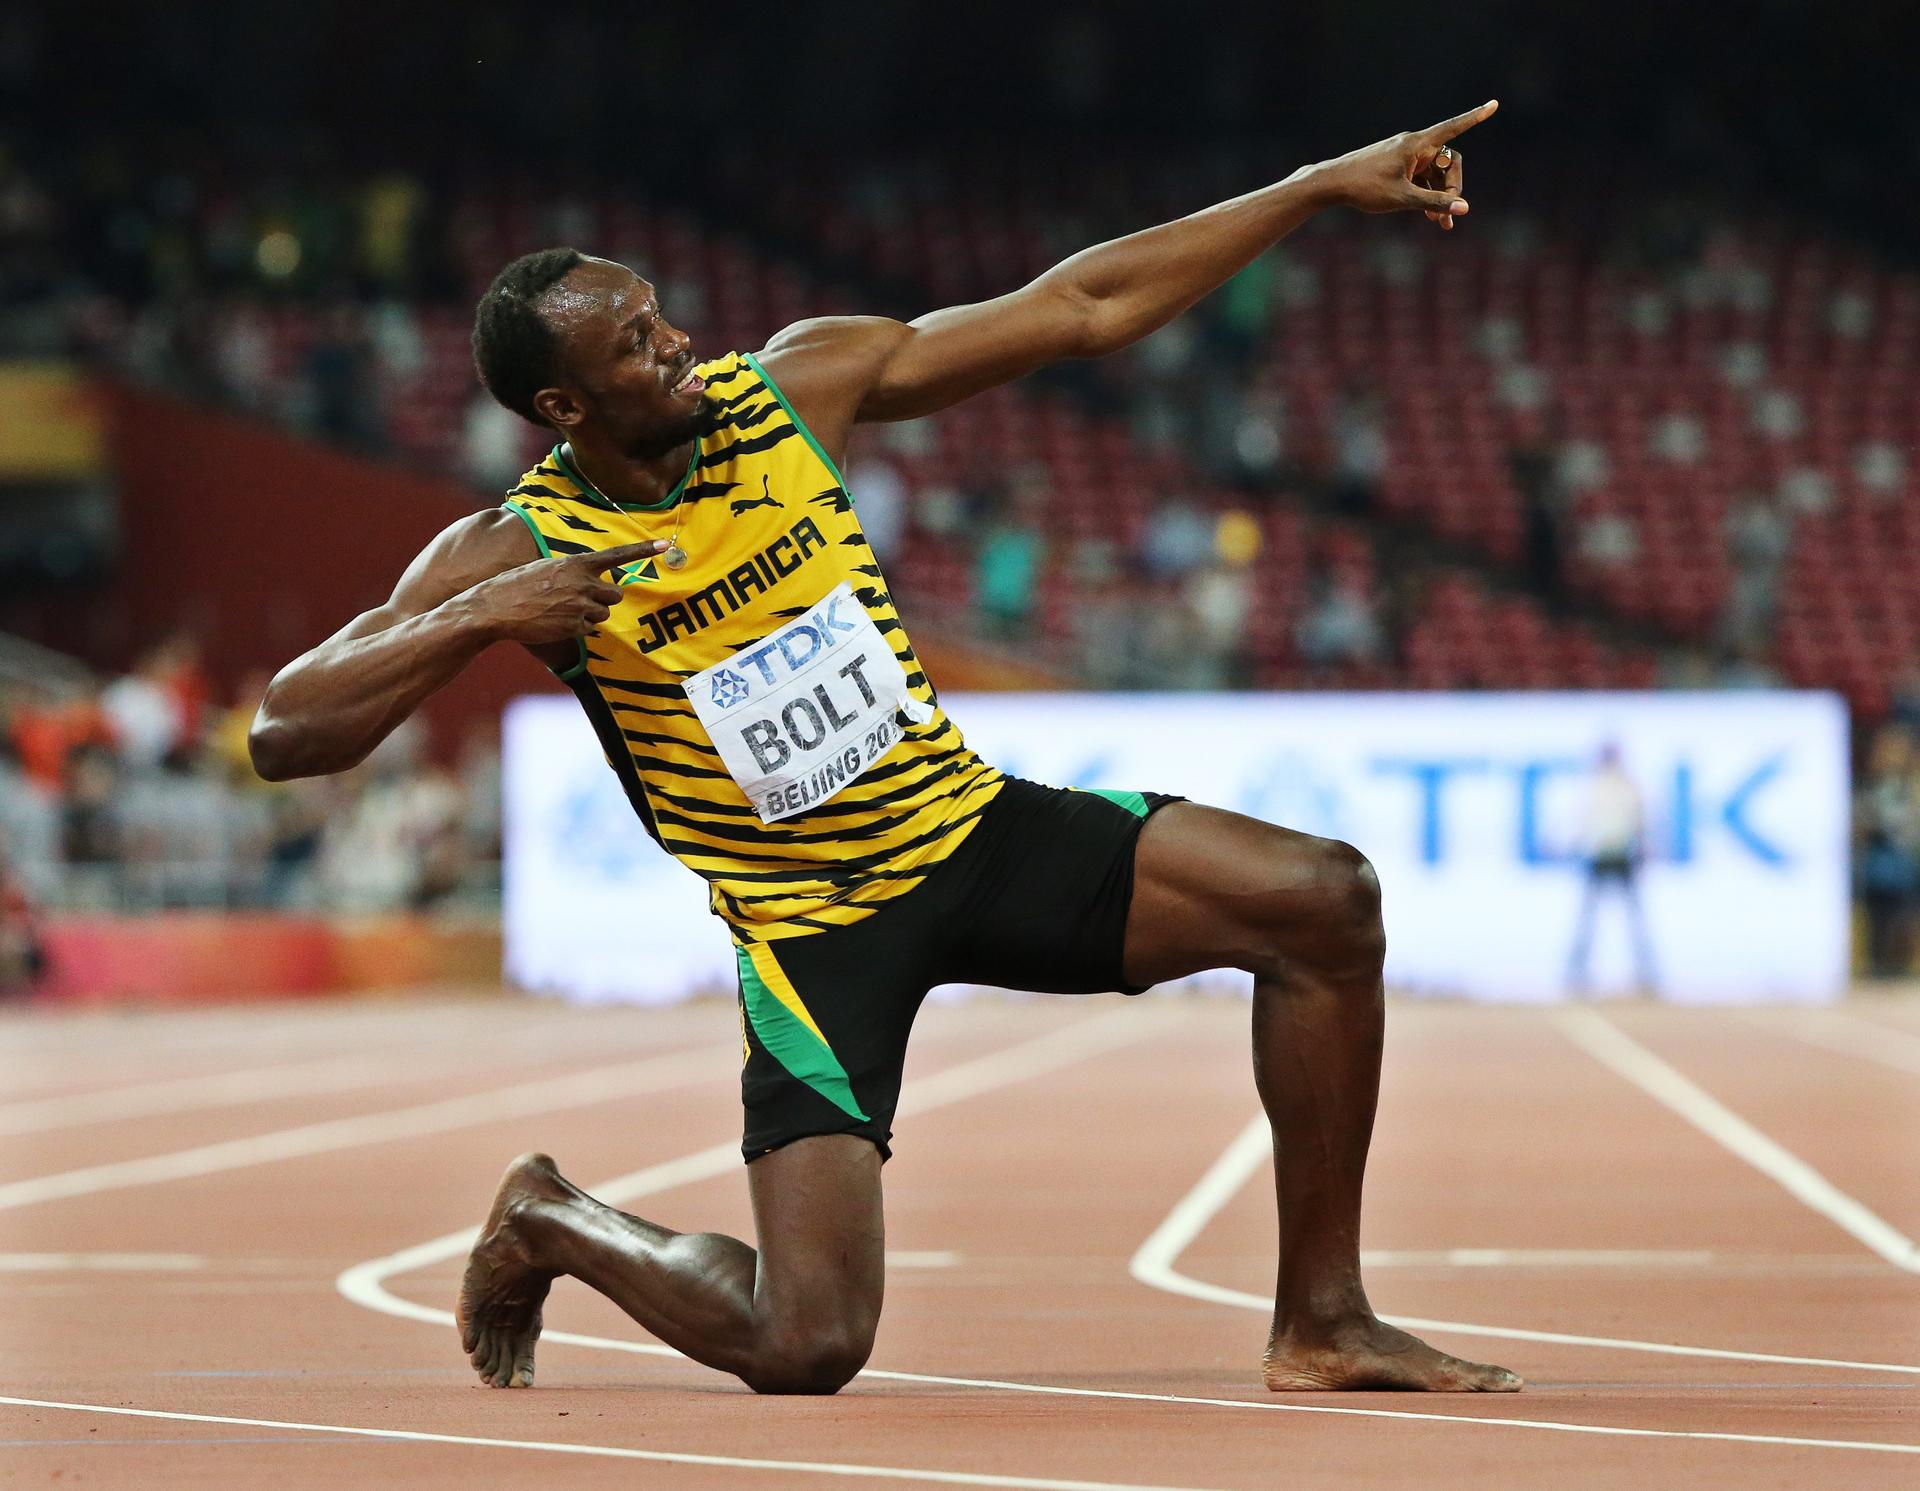 Jamaican sprinter Usain Bolt celebrates winning the 200m men's world championship title with his signature pose at the Bird's Nest stadium in Beijing. Photo: EPA